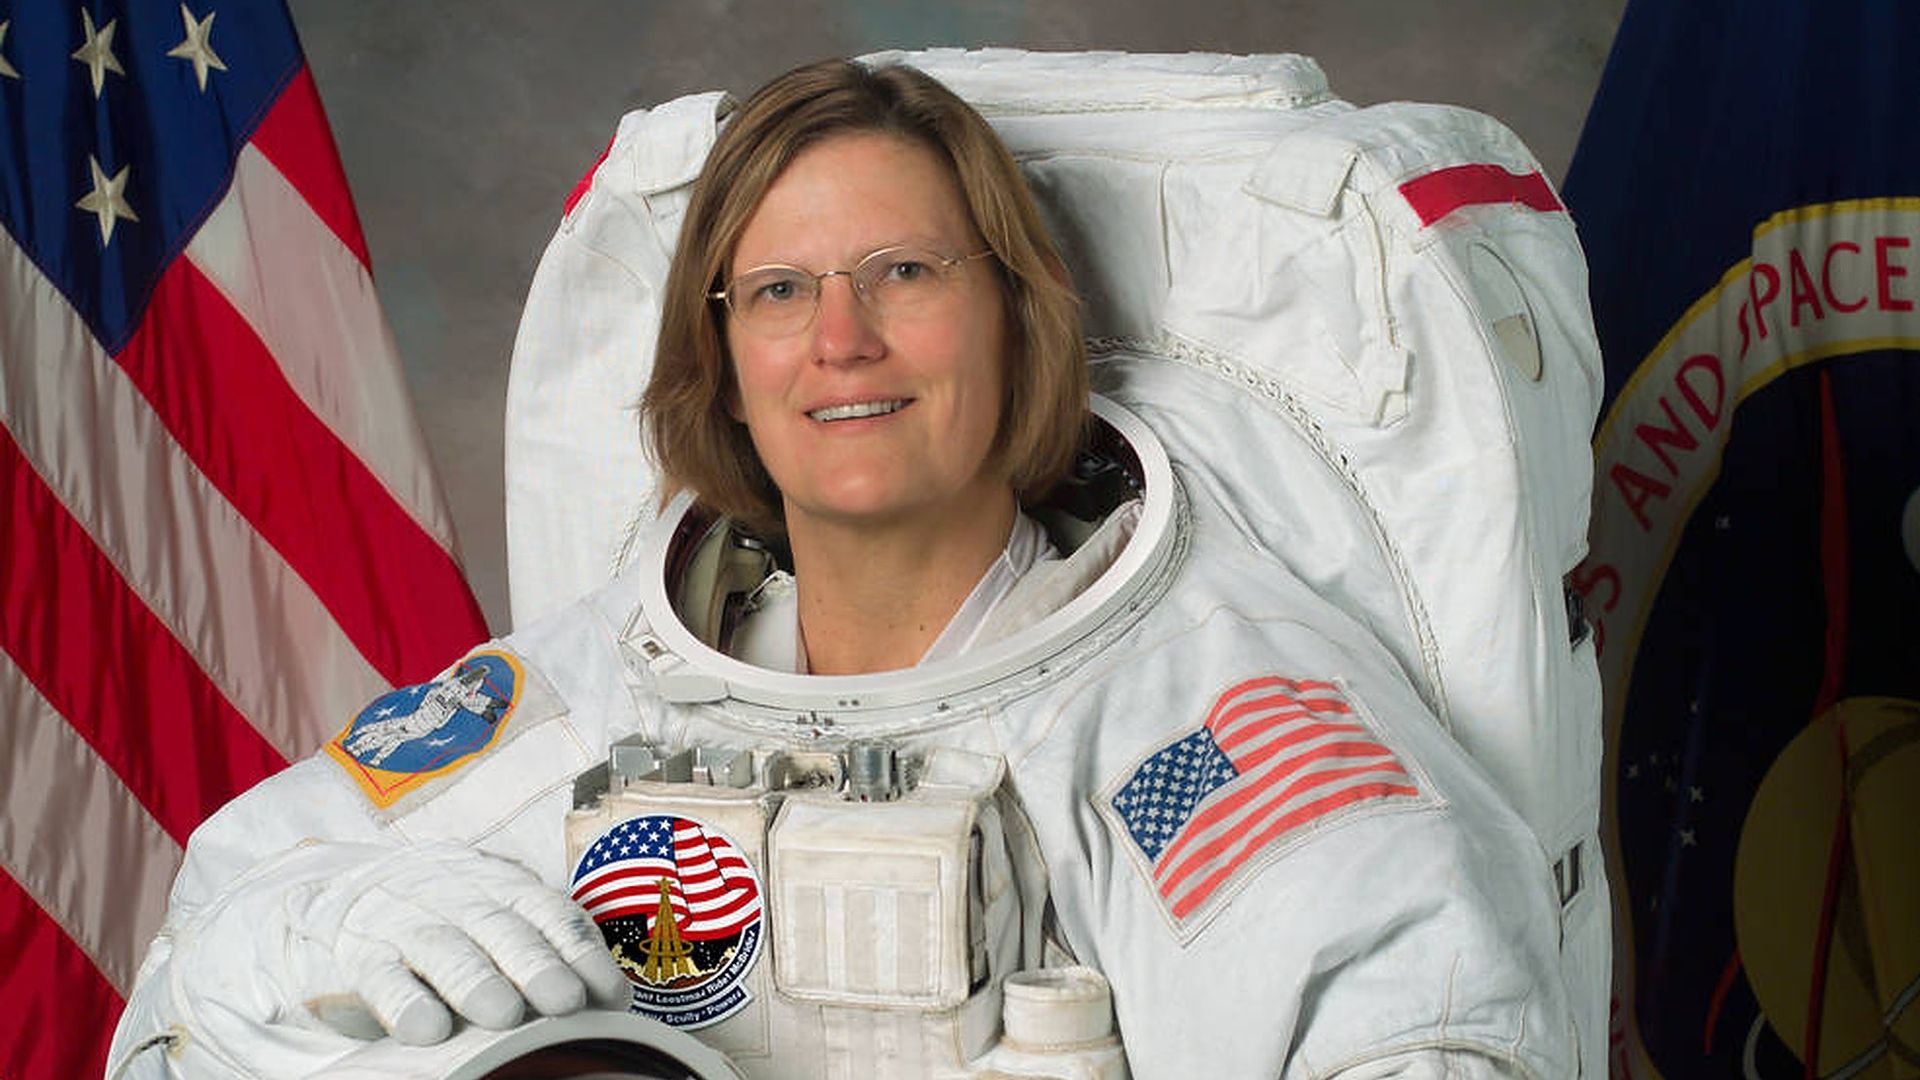 A photo of Kathy Sullivan as a NASA astronaut